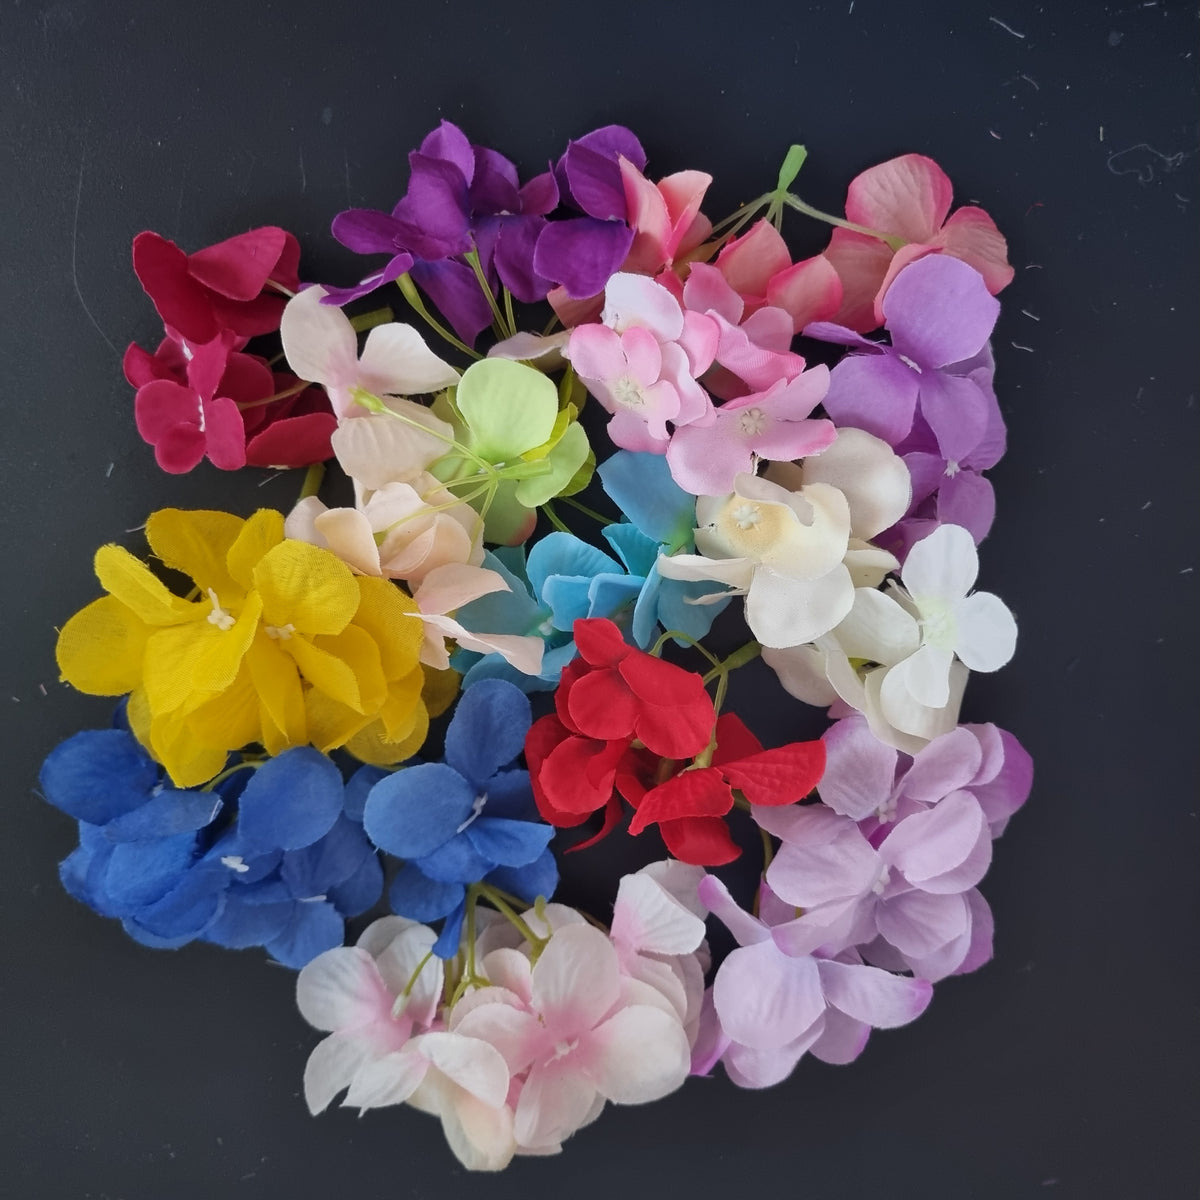 Pose med hortensiaer - Hårpynt med blomster og perler til bryllup, konfirmation og fest